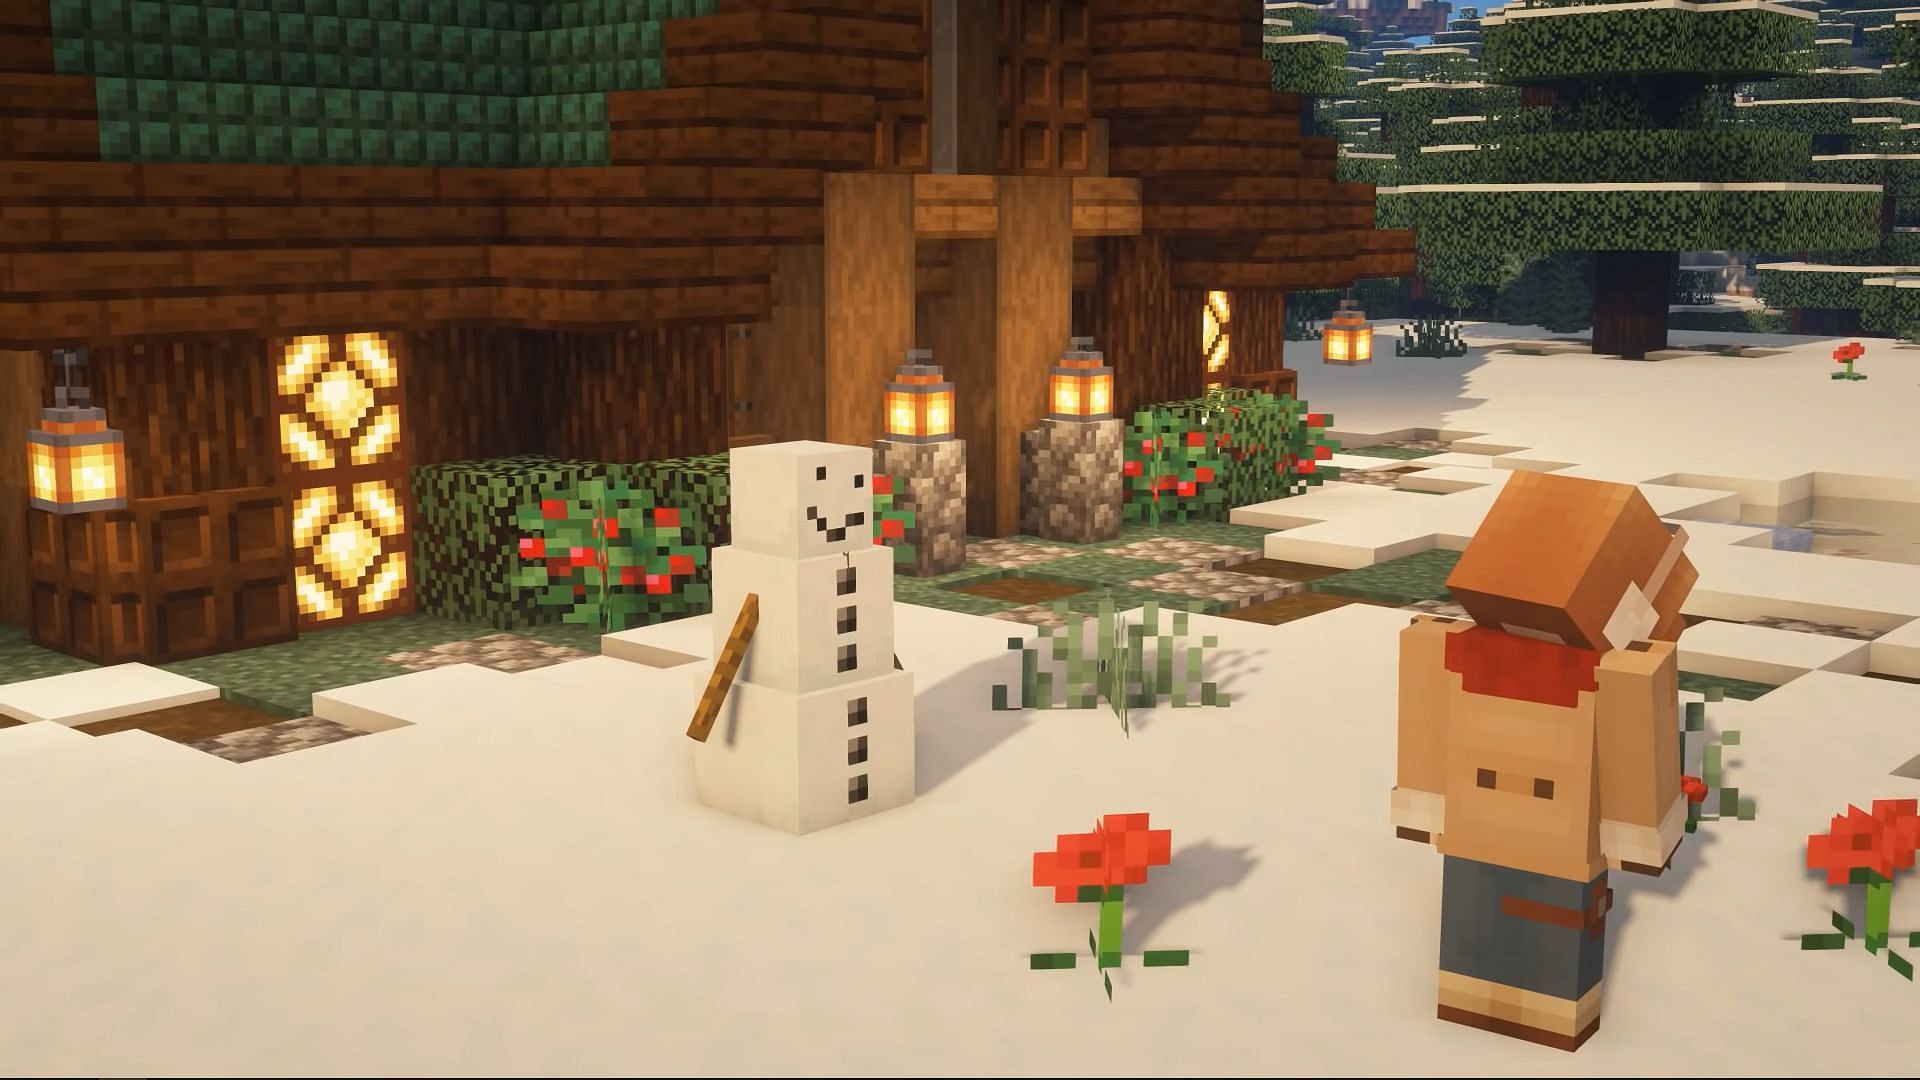 Snow Golem outside a house (Image via Minecraft)